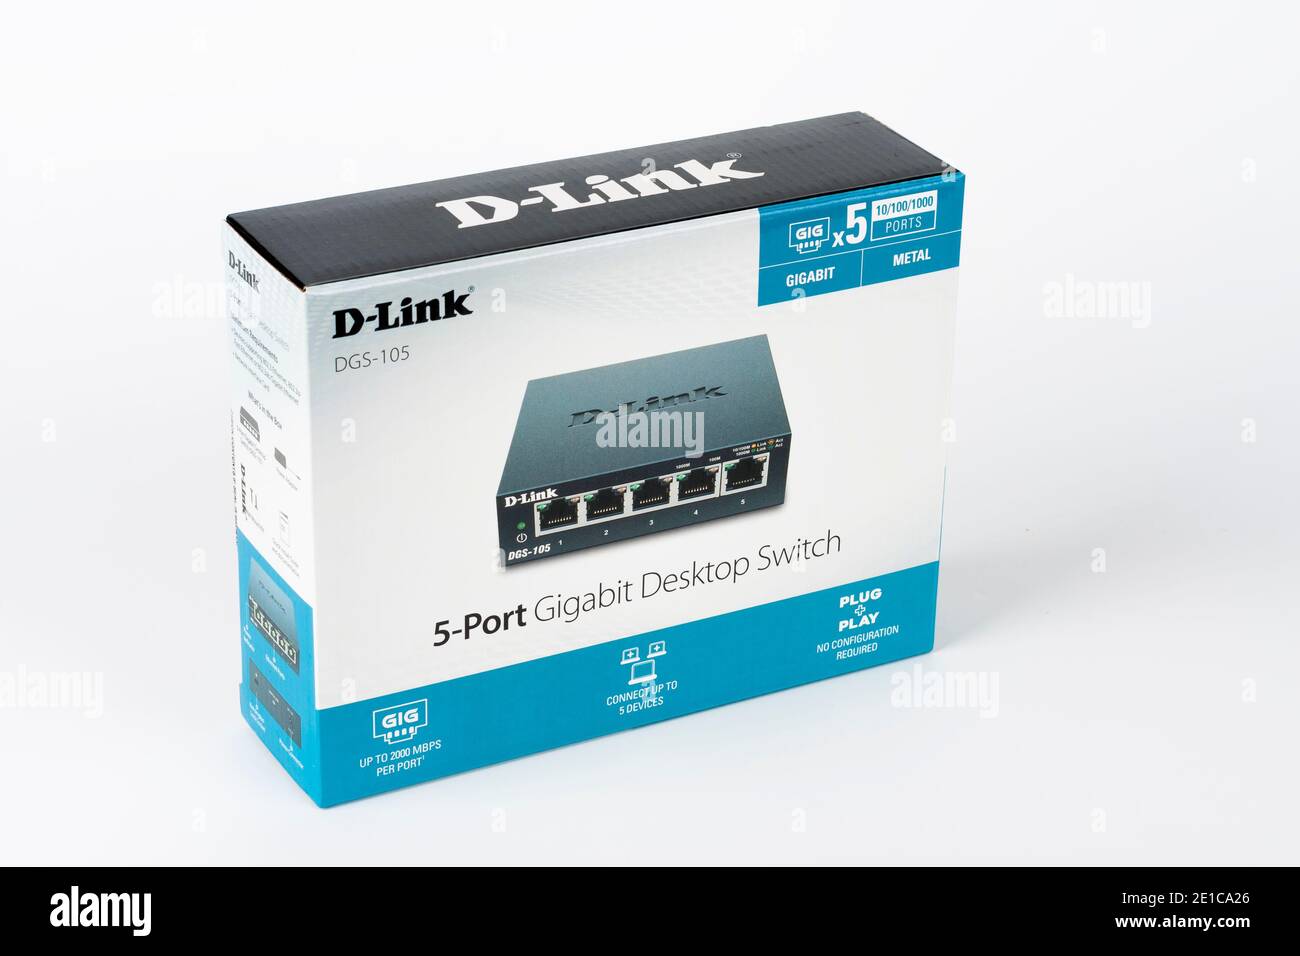 Brnenec, Czech Republic - January 31, 2020: Paper box, inside D-link DGS-105 5-port gigabit desktop switch. D-link is a Taiwanese networking equipment Stock Photo